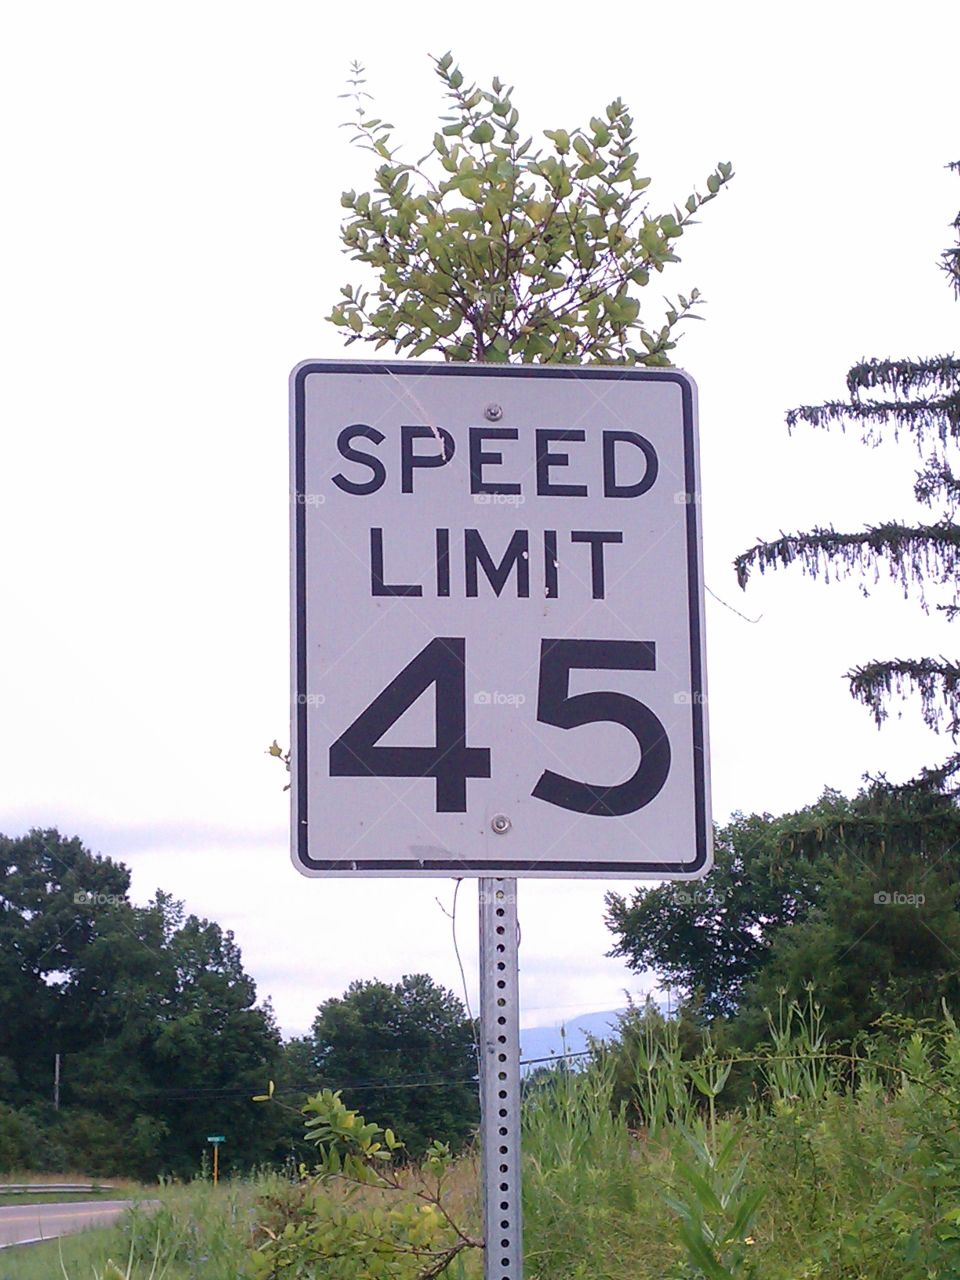 Bush growing on 45 mph sign